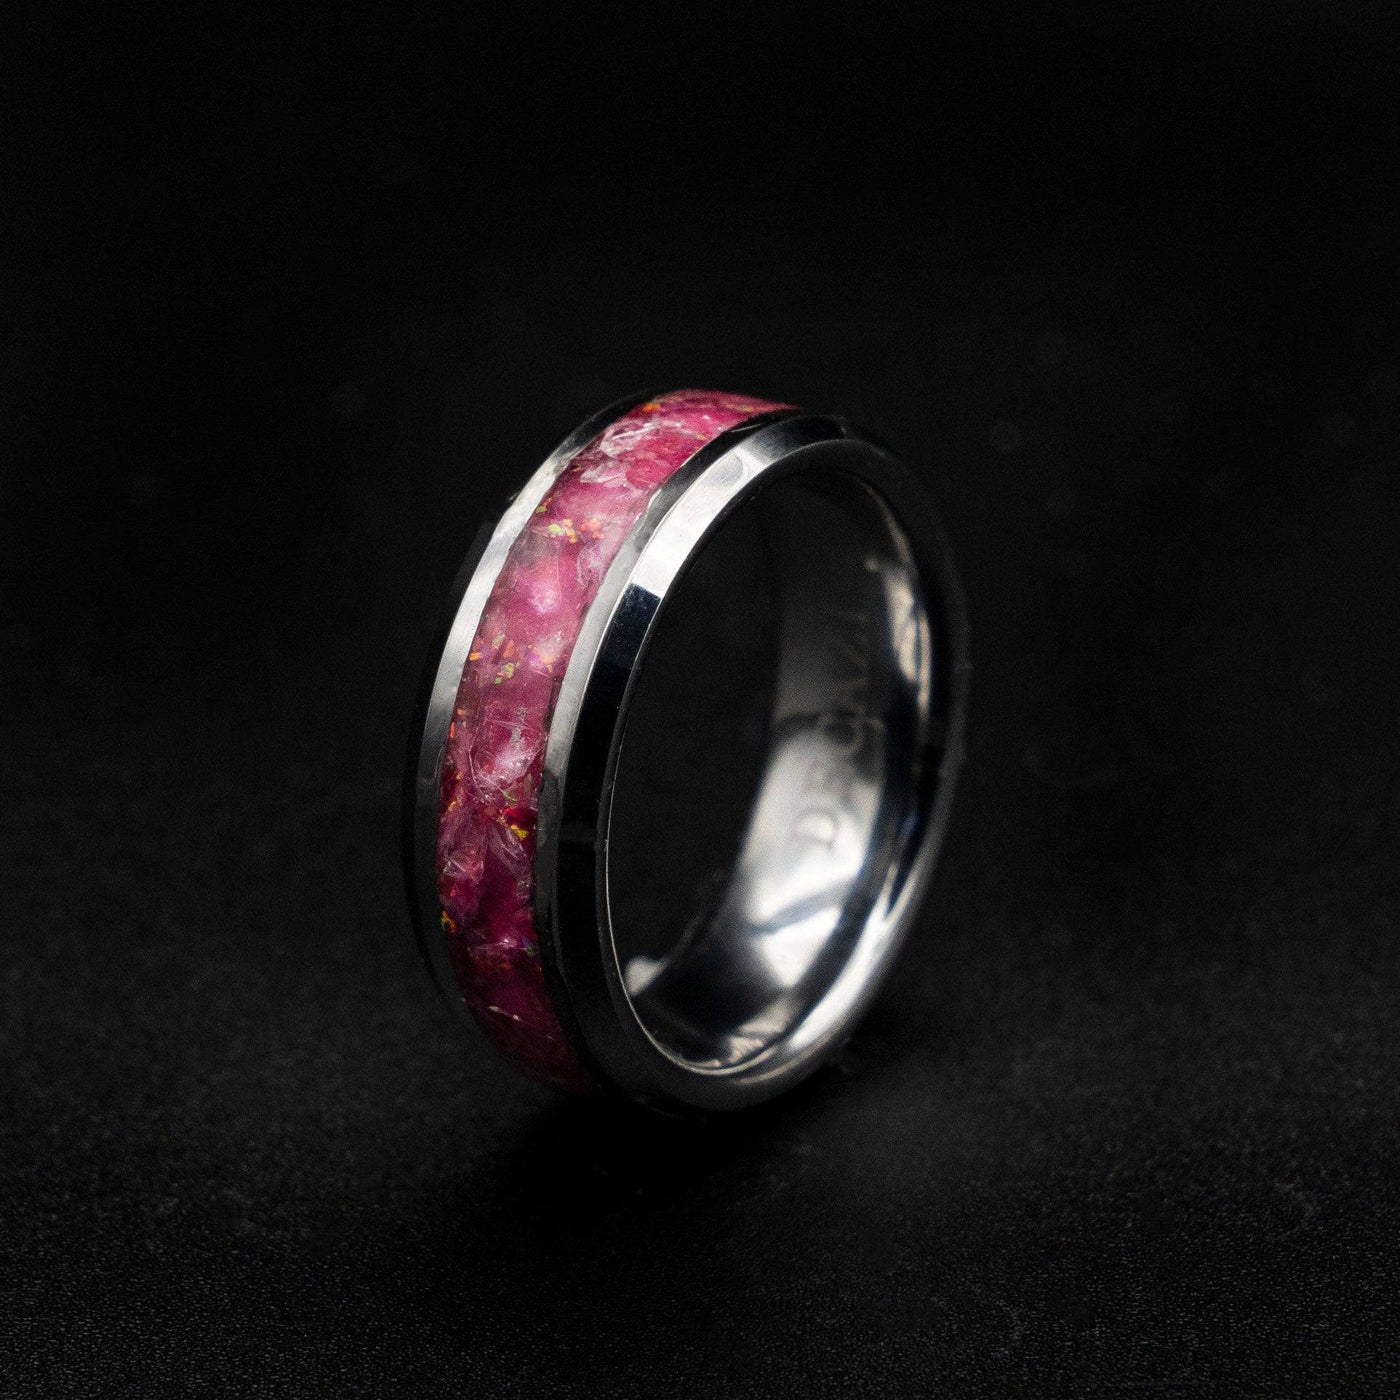 Tungsten Ring With Rose Quartz Inlay